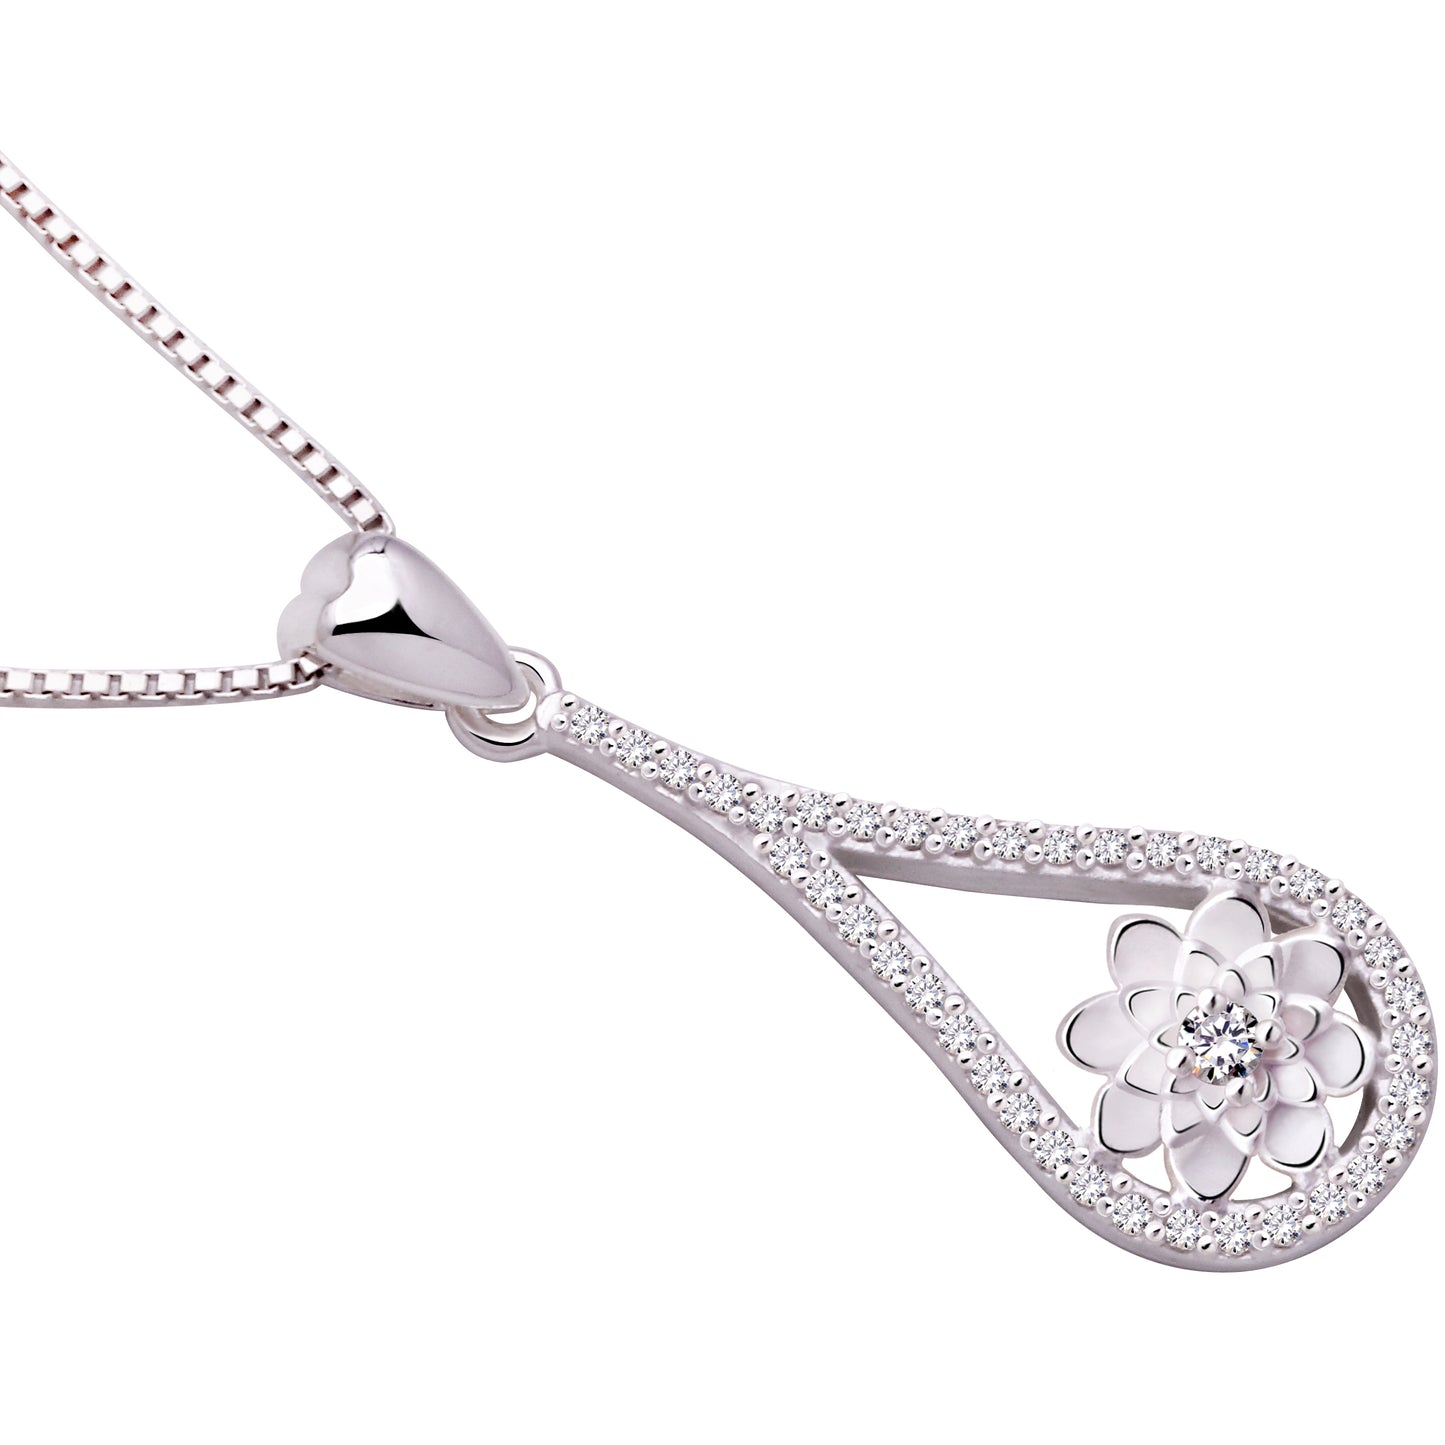 ALOV Jewelry Sterling Silver Cubic Zirconia Pendant Necklace